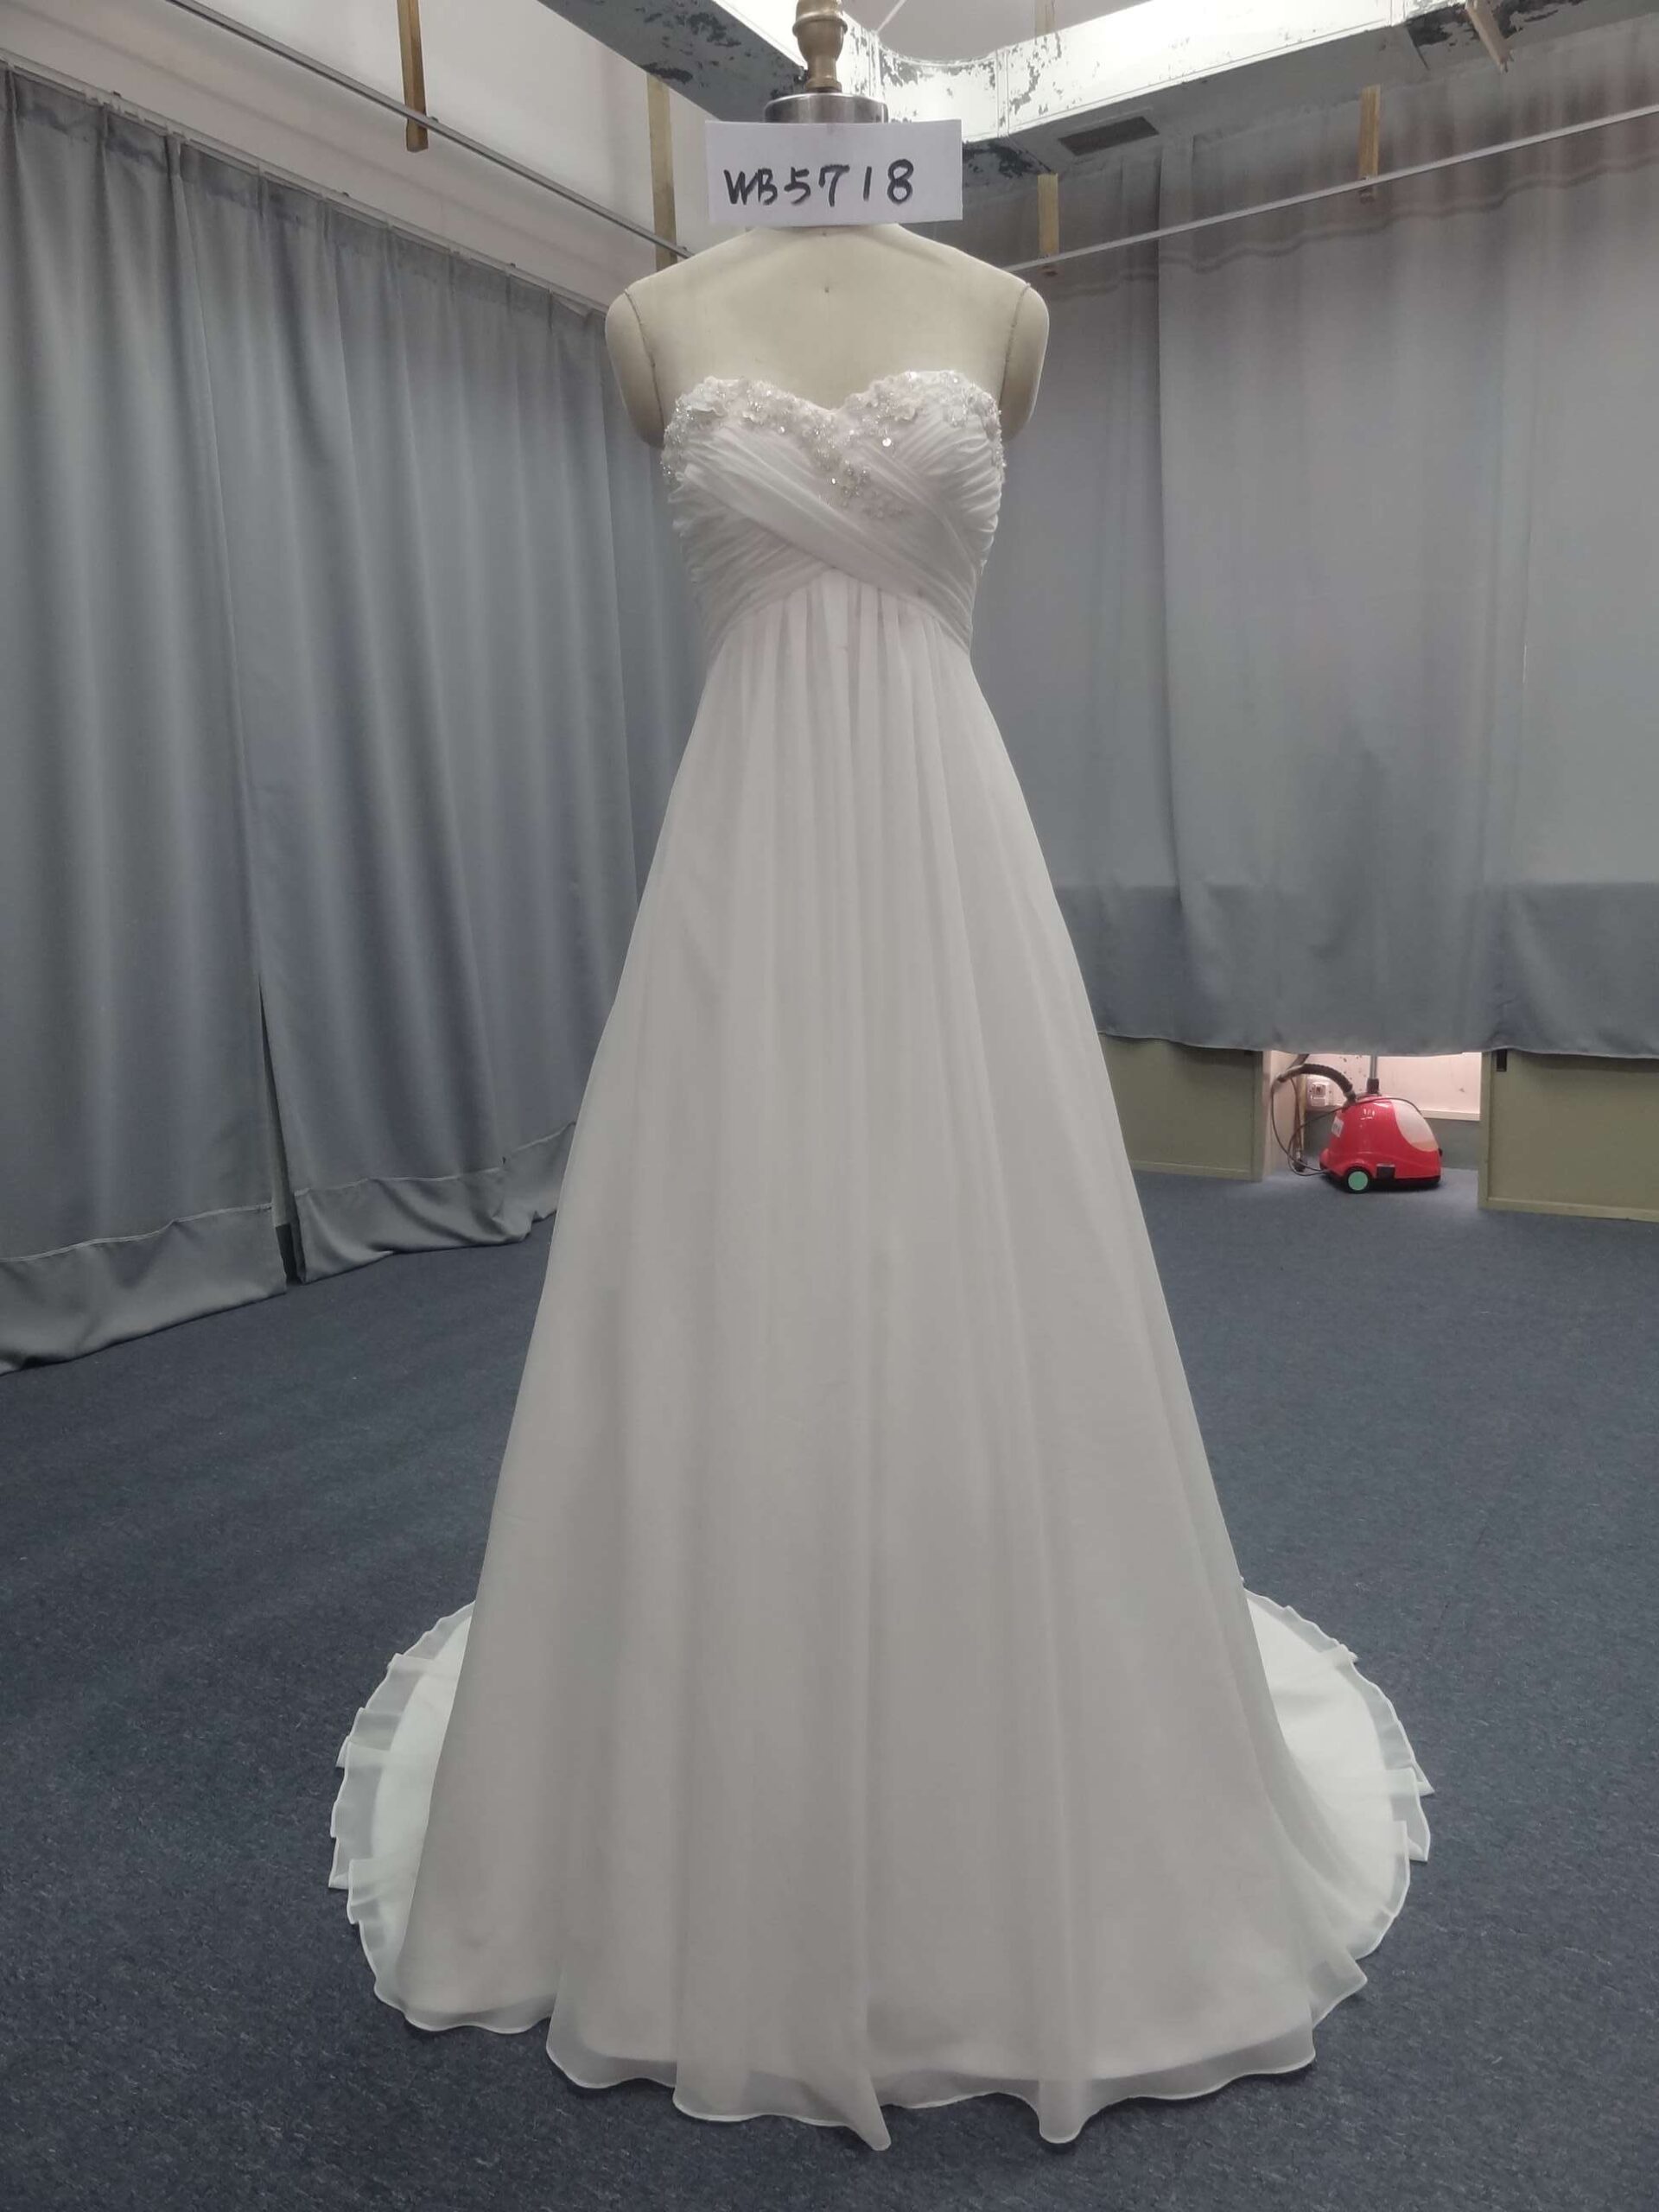 Jasmine Empire 2021 Wedding Dresses | Wedding Inspirasi